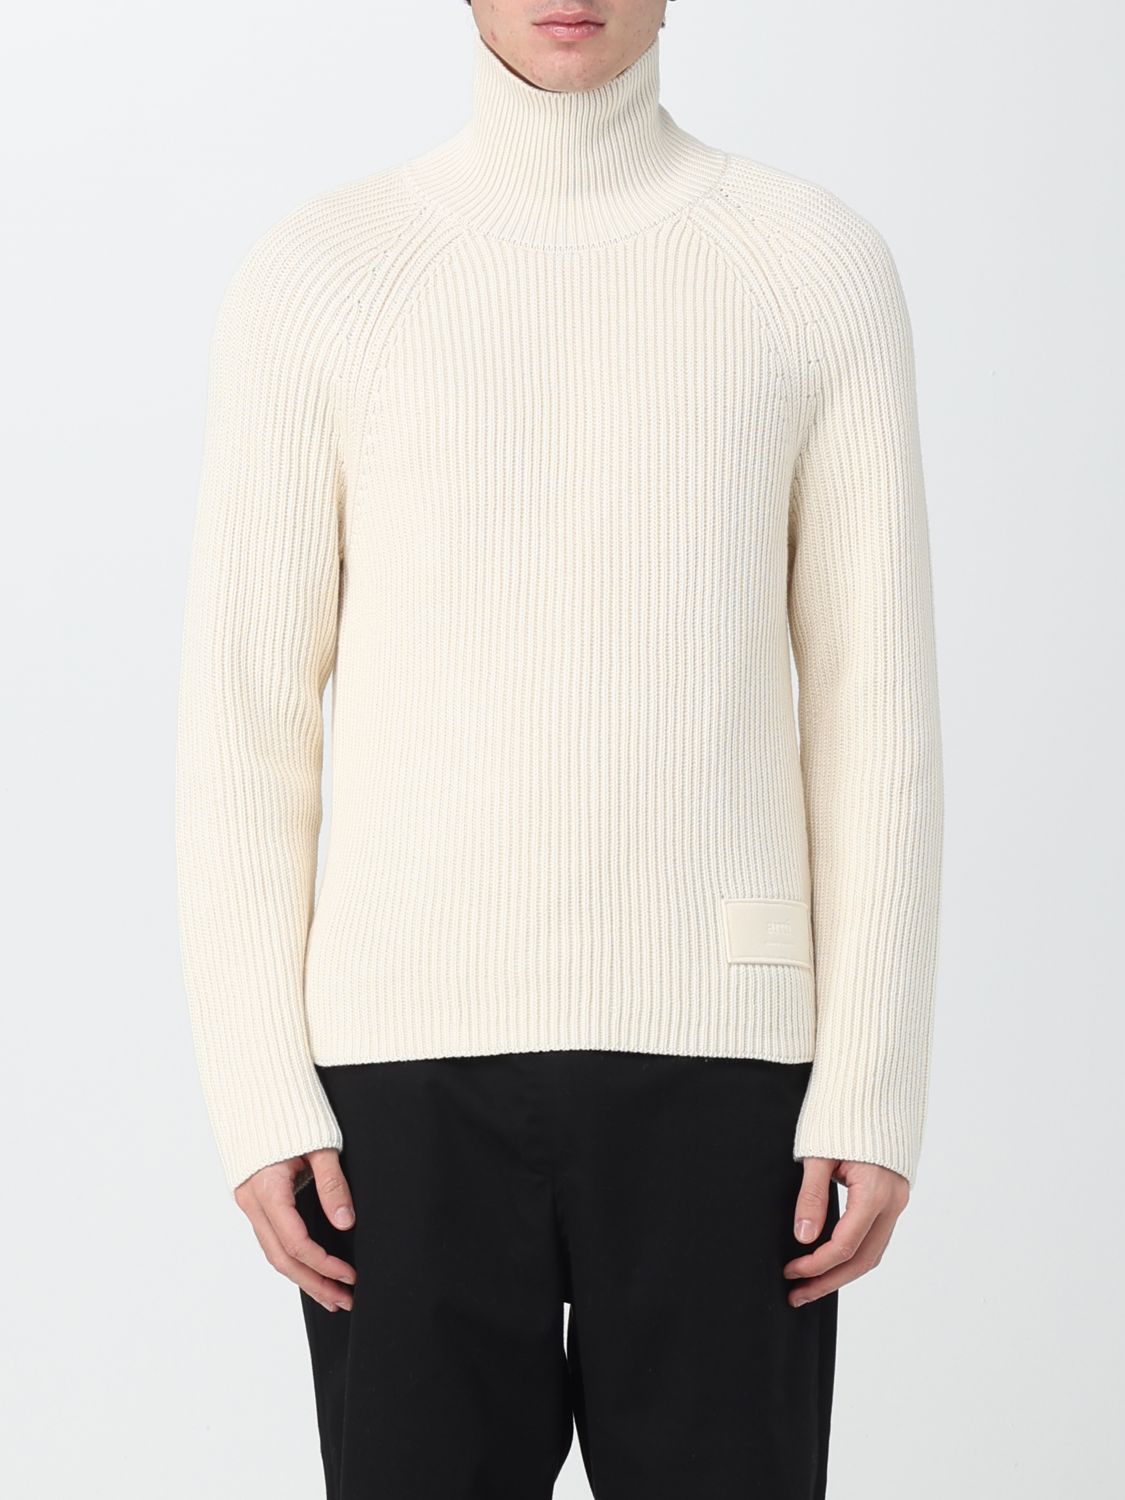 Shop Ami Alexandre Mattiussi Sweater Ami Paris Men Color Ivory